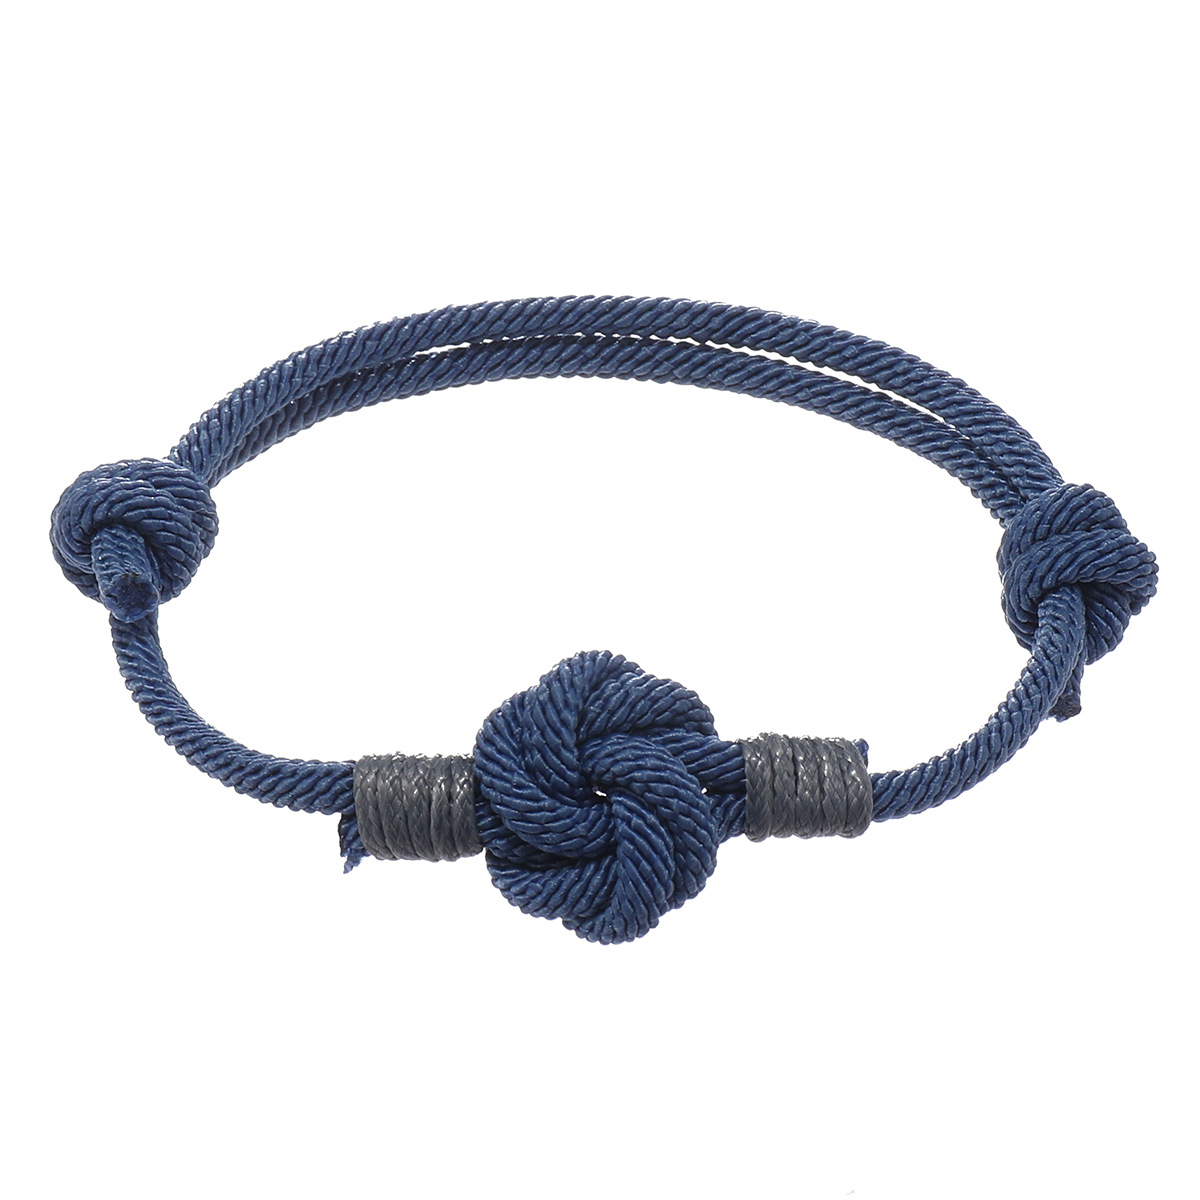 10:Blue (mandala knot)